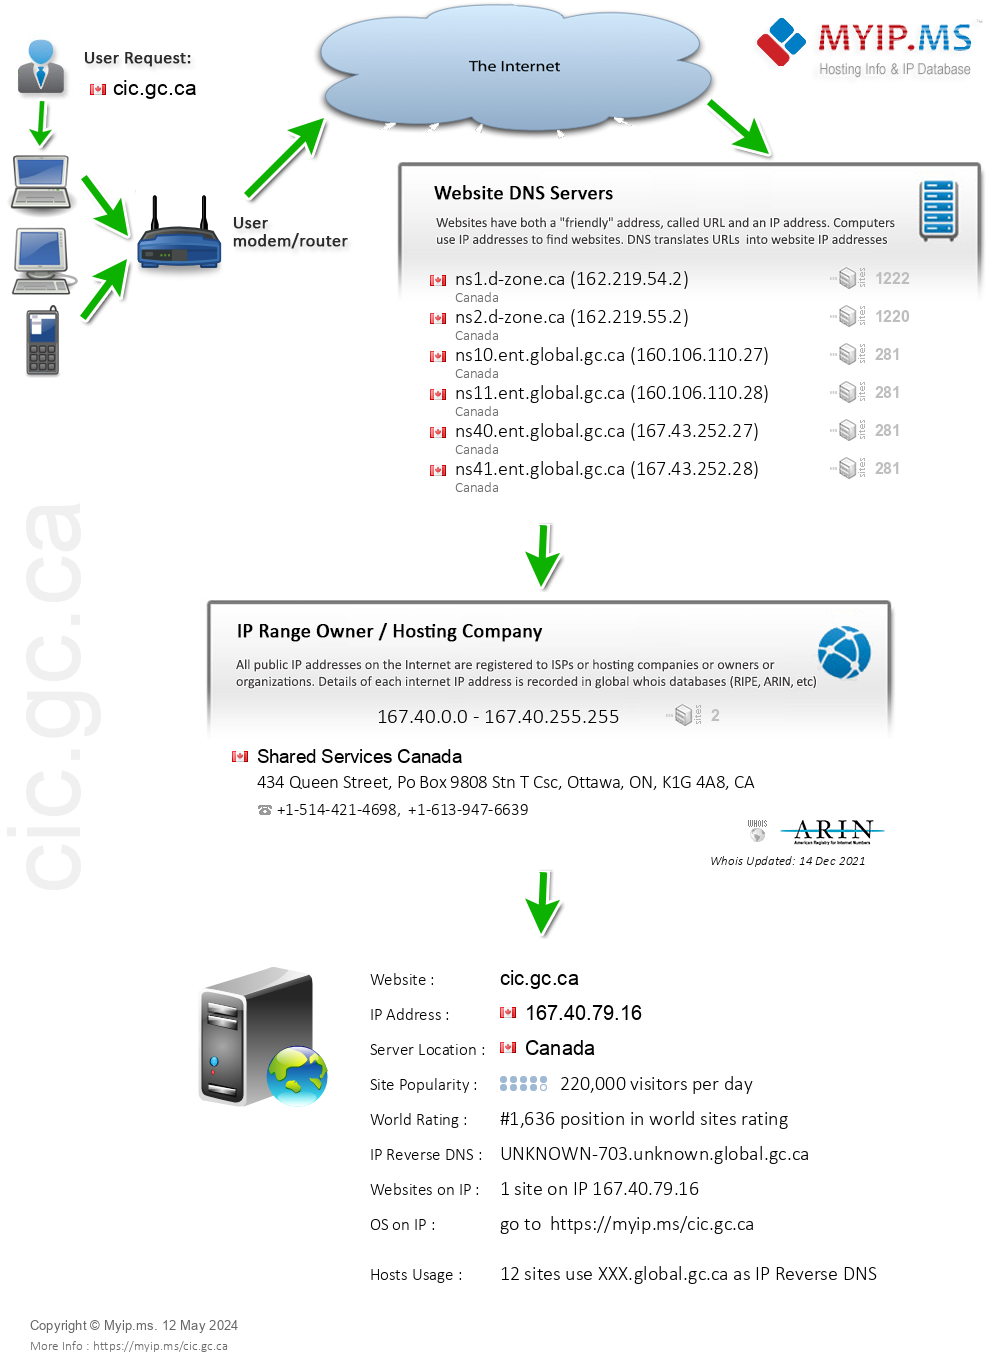 Cic.gc.ca - Website Hosting Visual IP Diagram